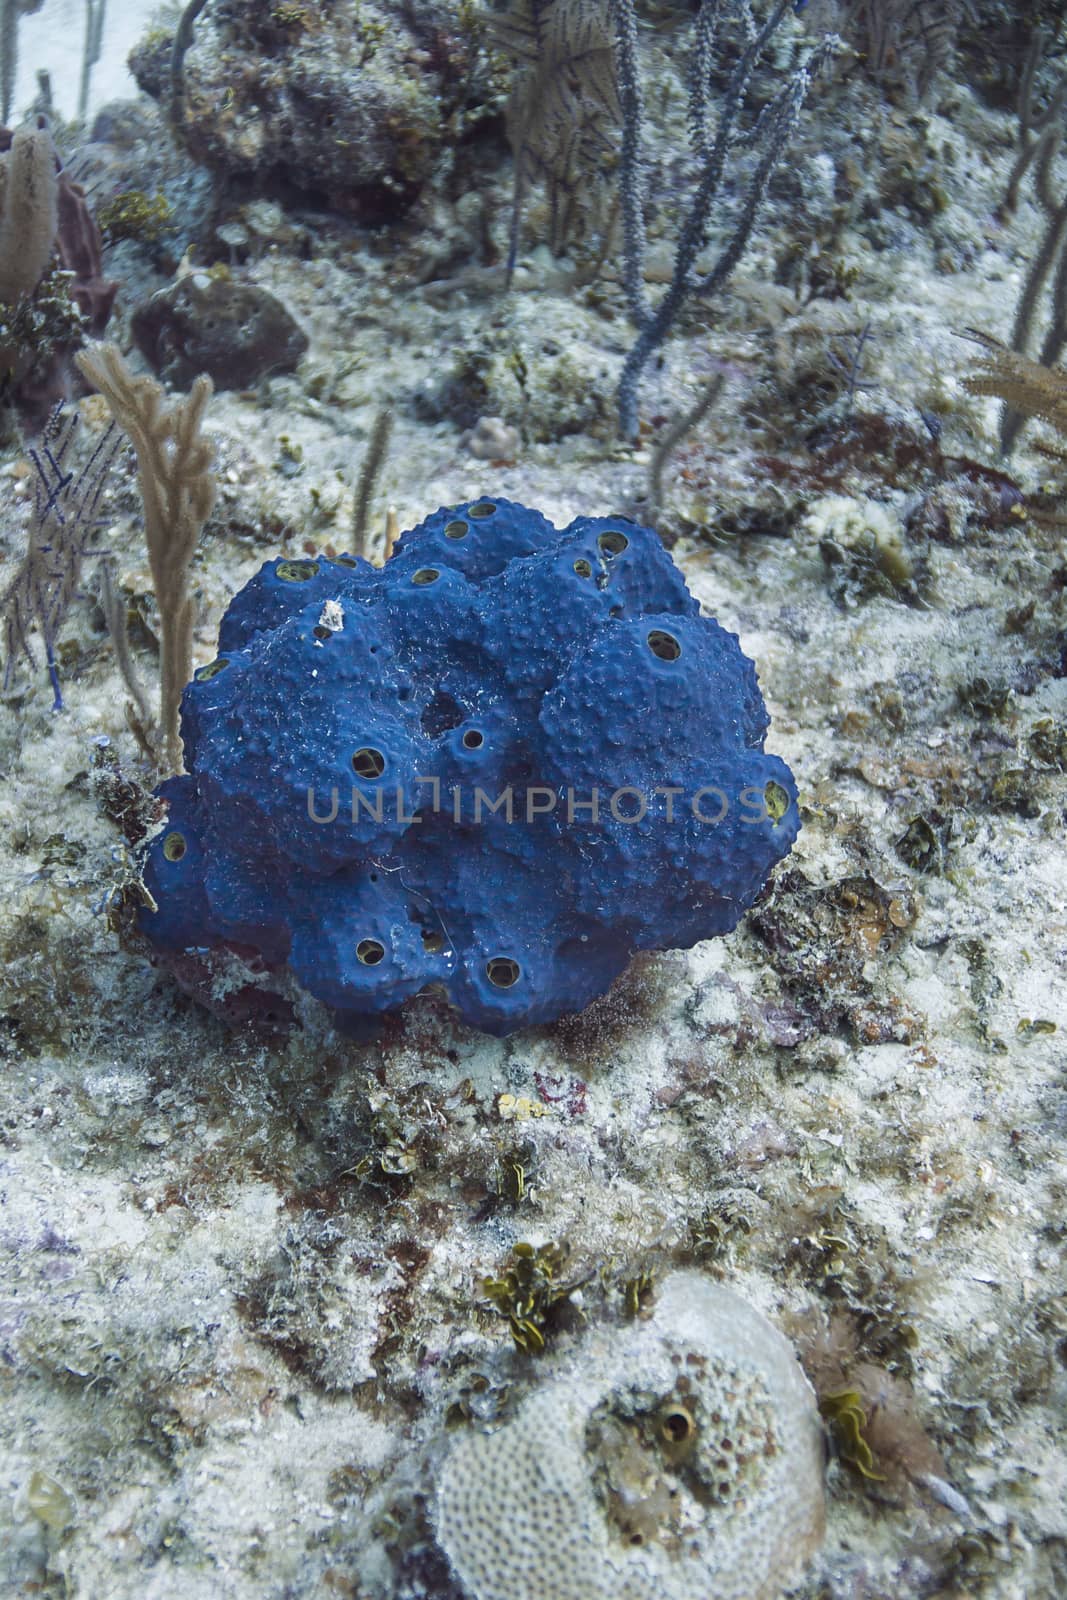 Blue sponge by mypstudio